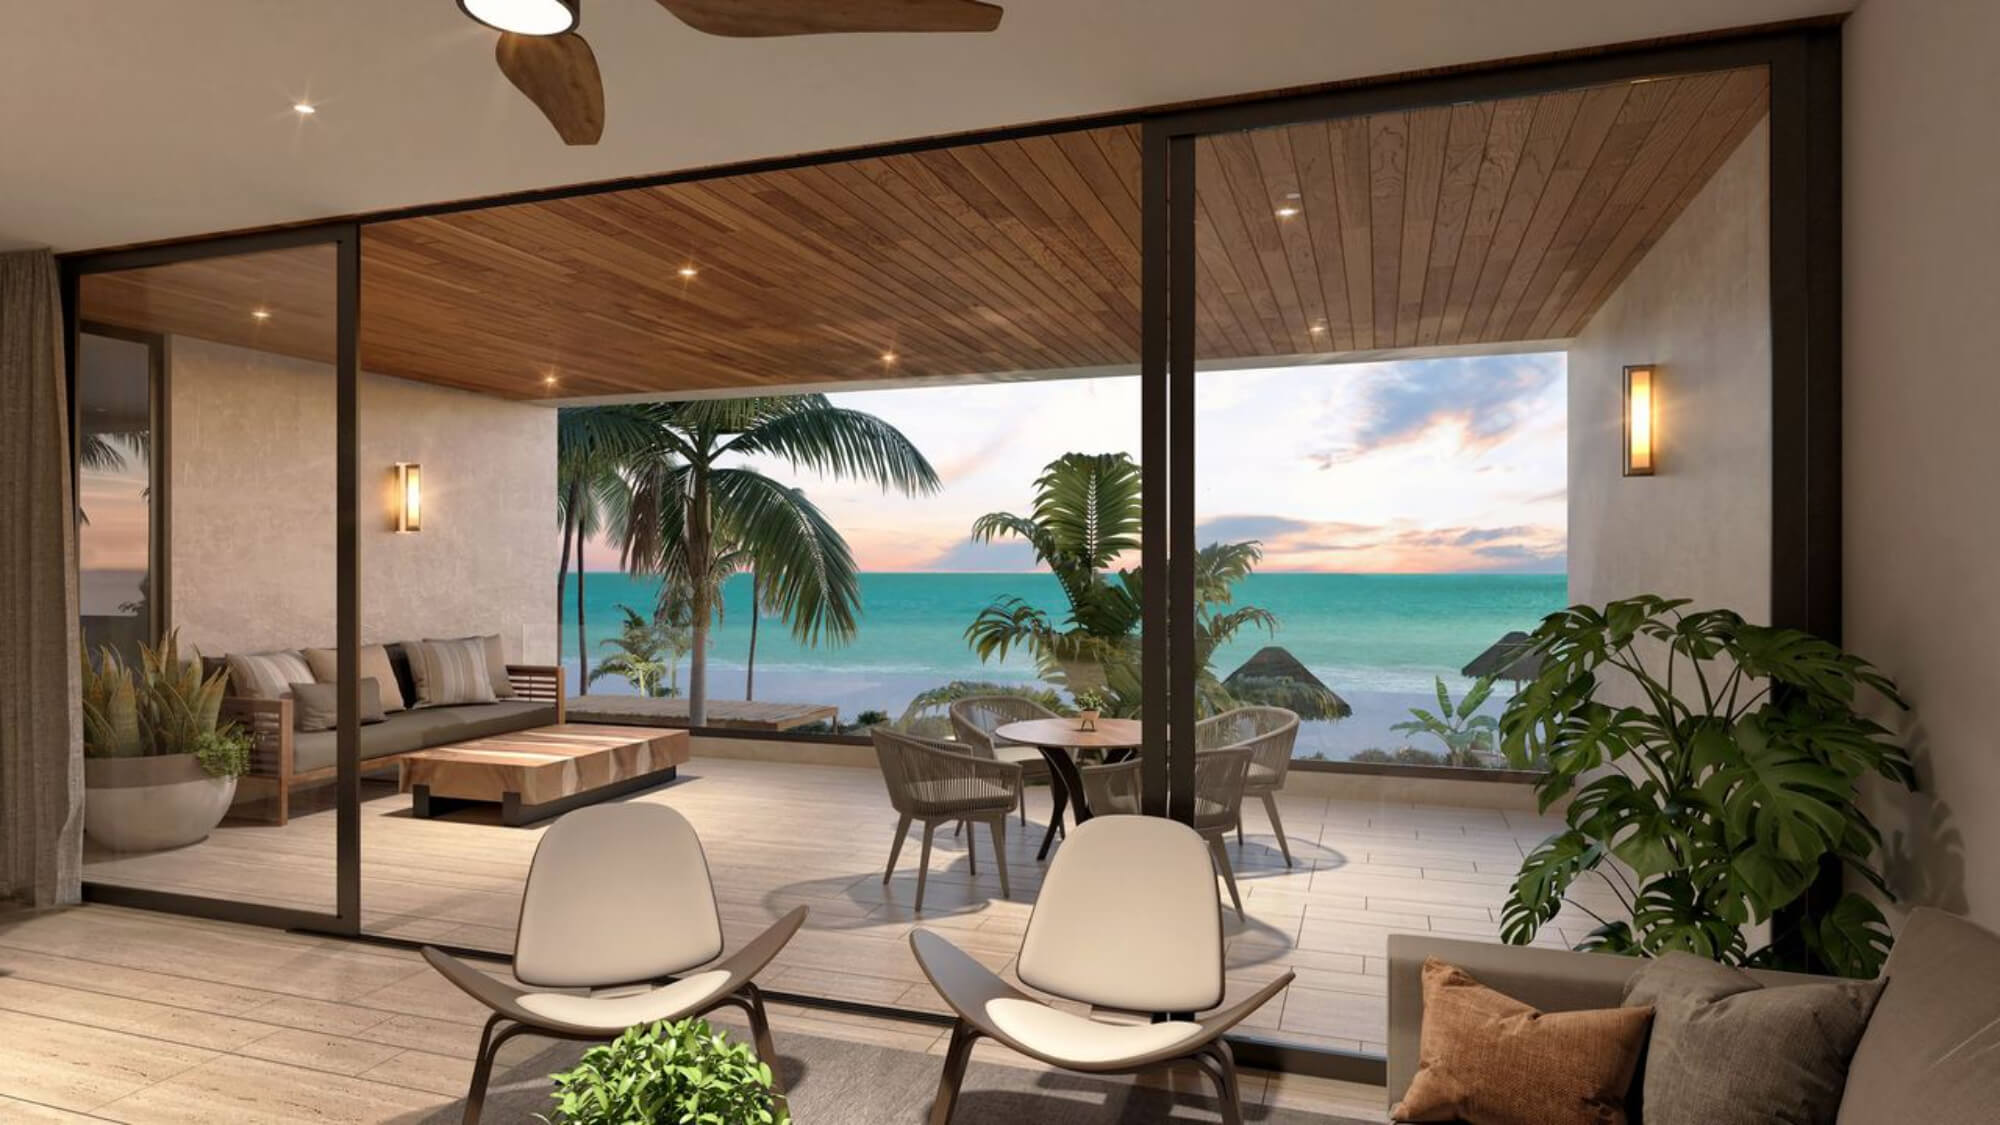 Condominium with ocean view pool and more amenities for sale Yucatan.